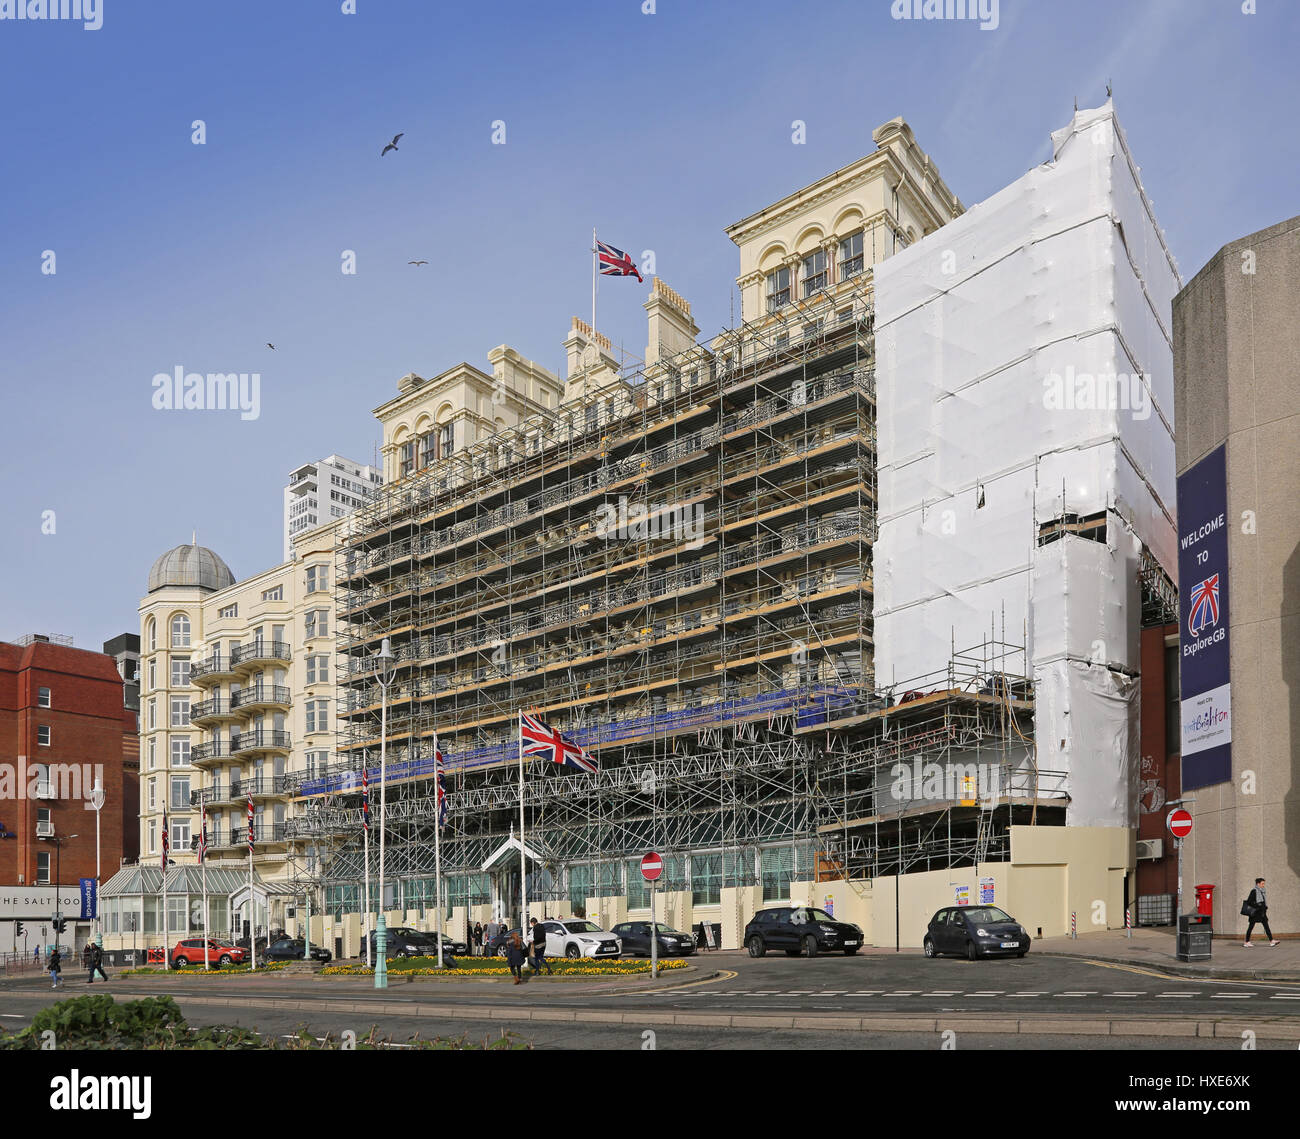 Brighton's Grand Hotel shrouded in scaffolding during refurbishment work, March 2017 Stock Photo